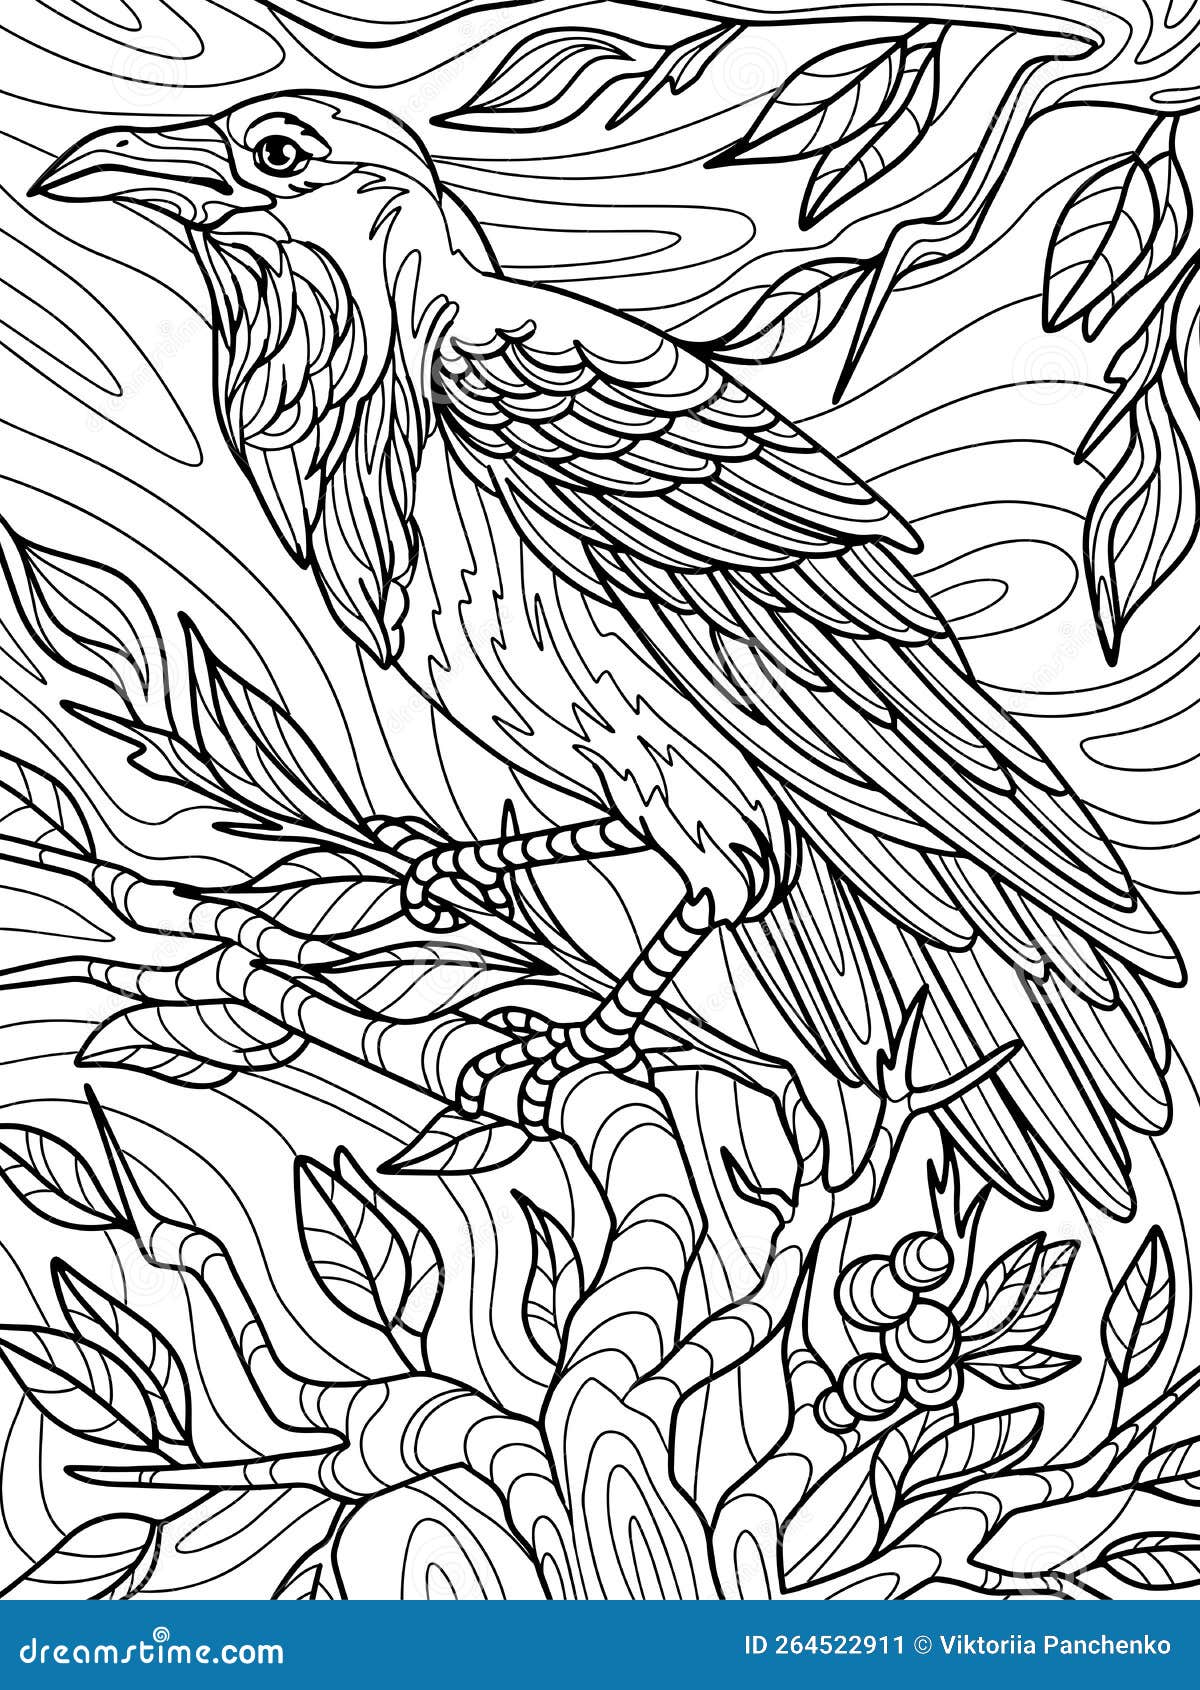 Zen raven stock illustrations â zen raven stock illustrations vectors clipart